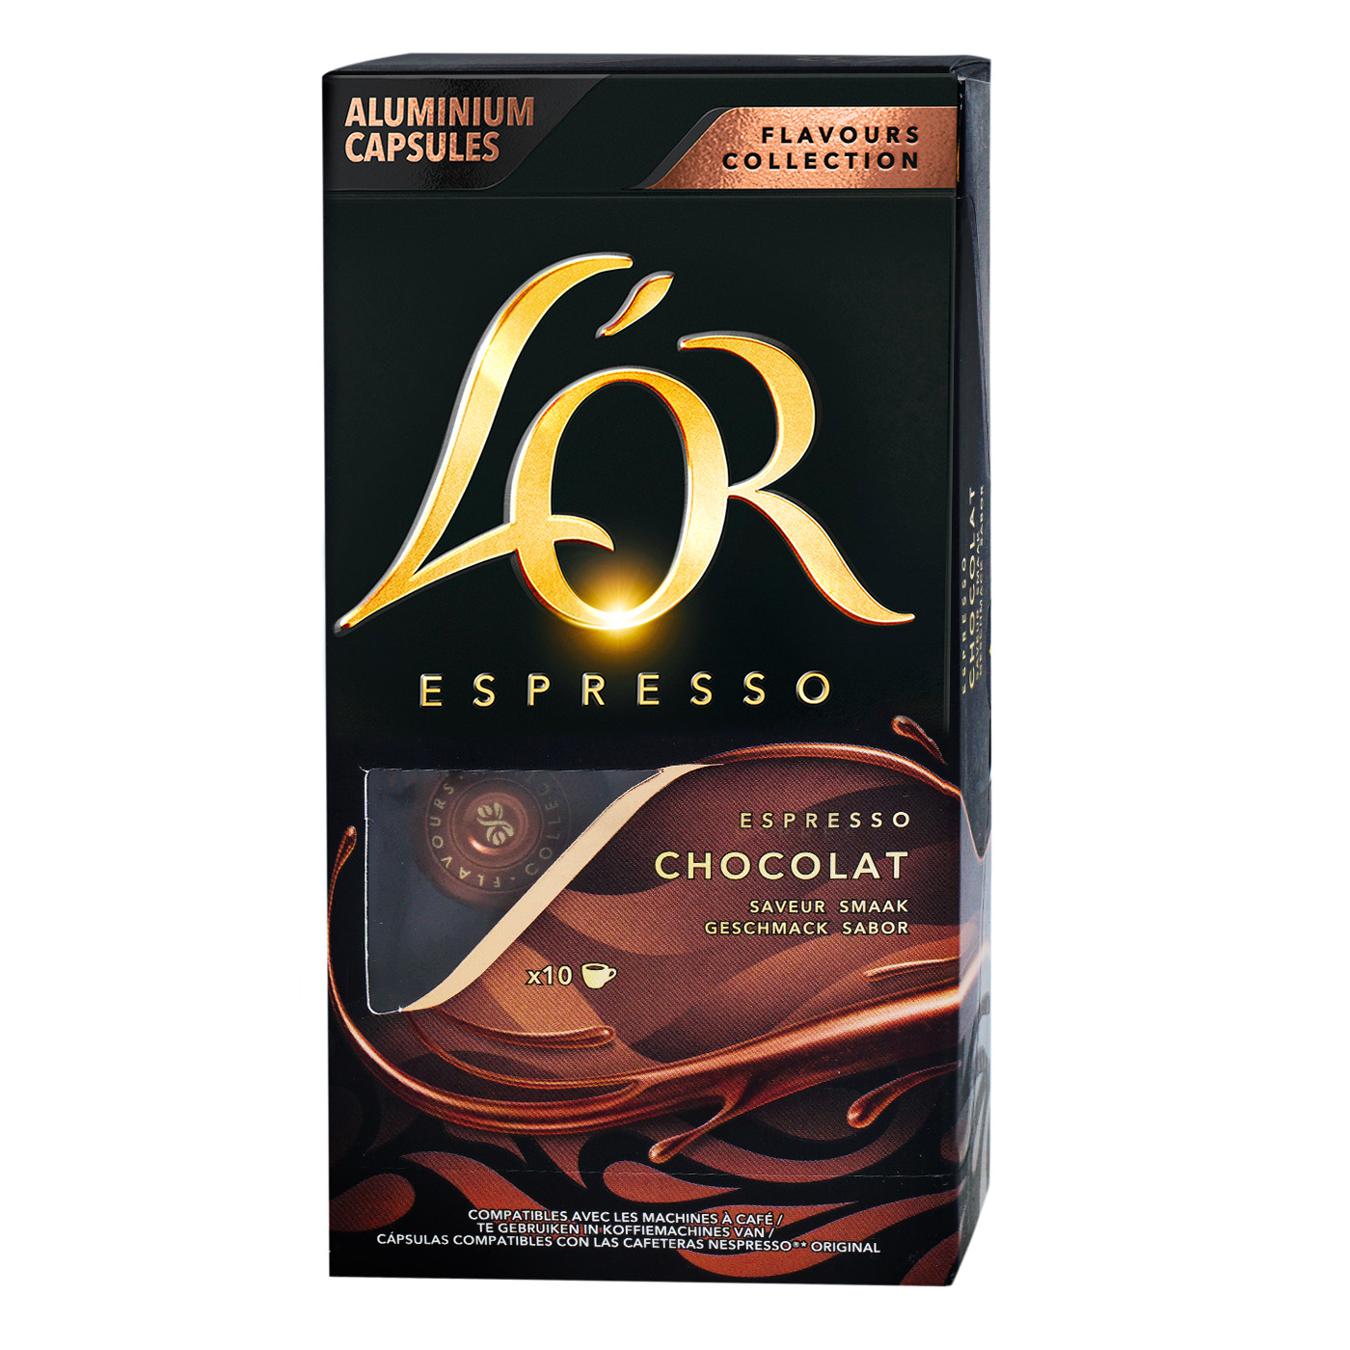 Ground coffee L'OR Espresso Сhocolat in capsules with chocolate aroma 10*52g